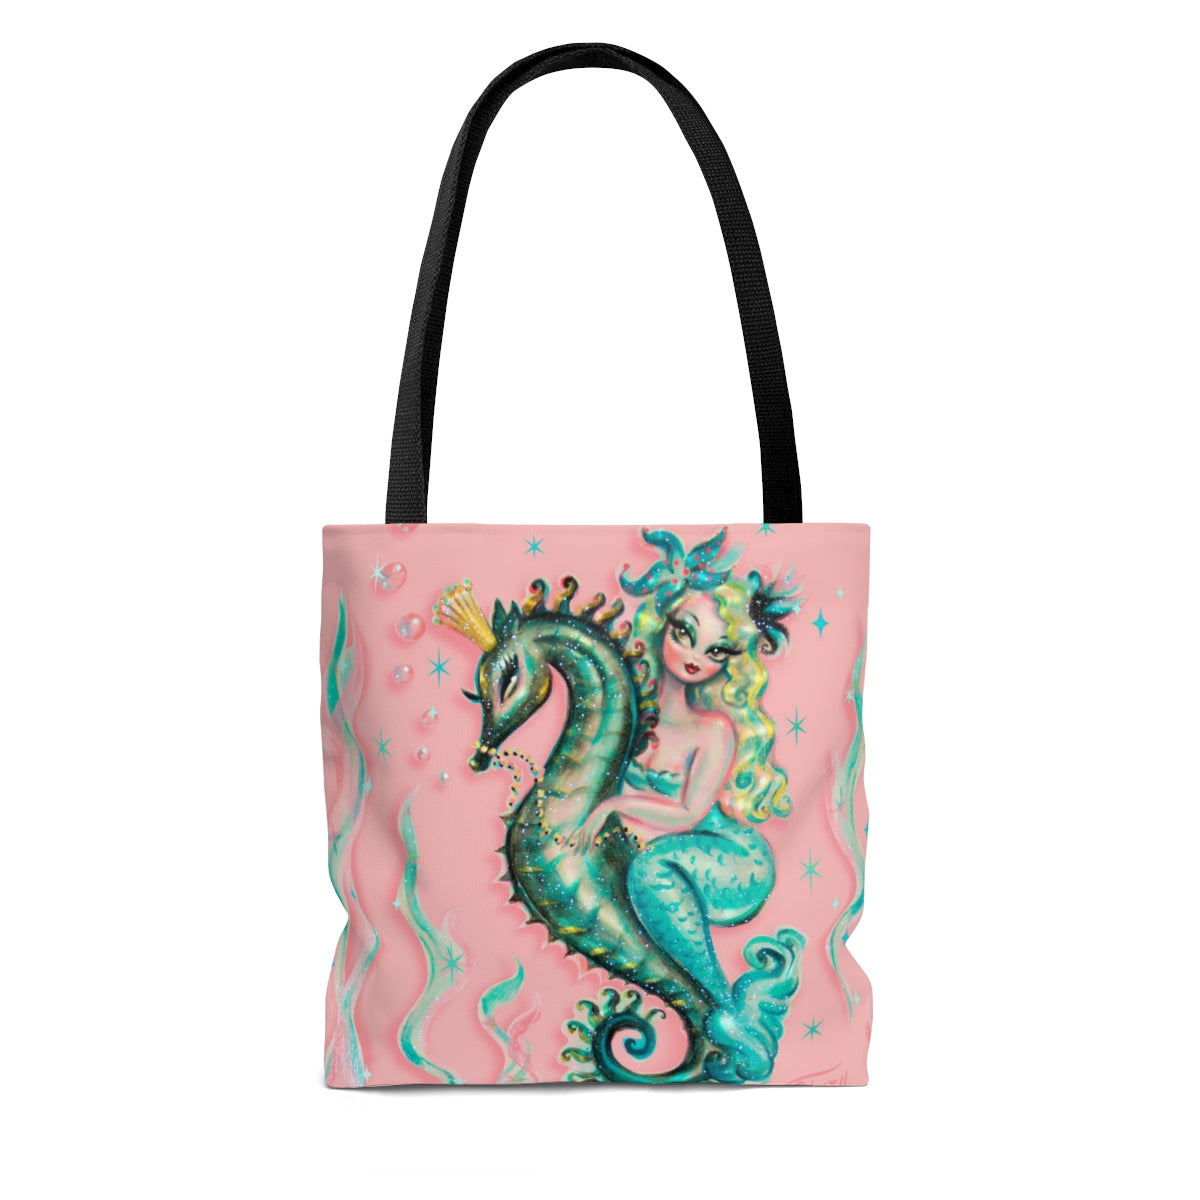 Blue Mermaid Riding a Seahorse Prince • Tote Bag